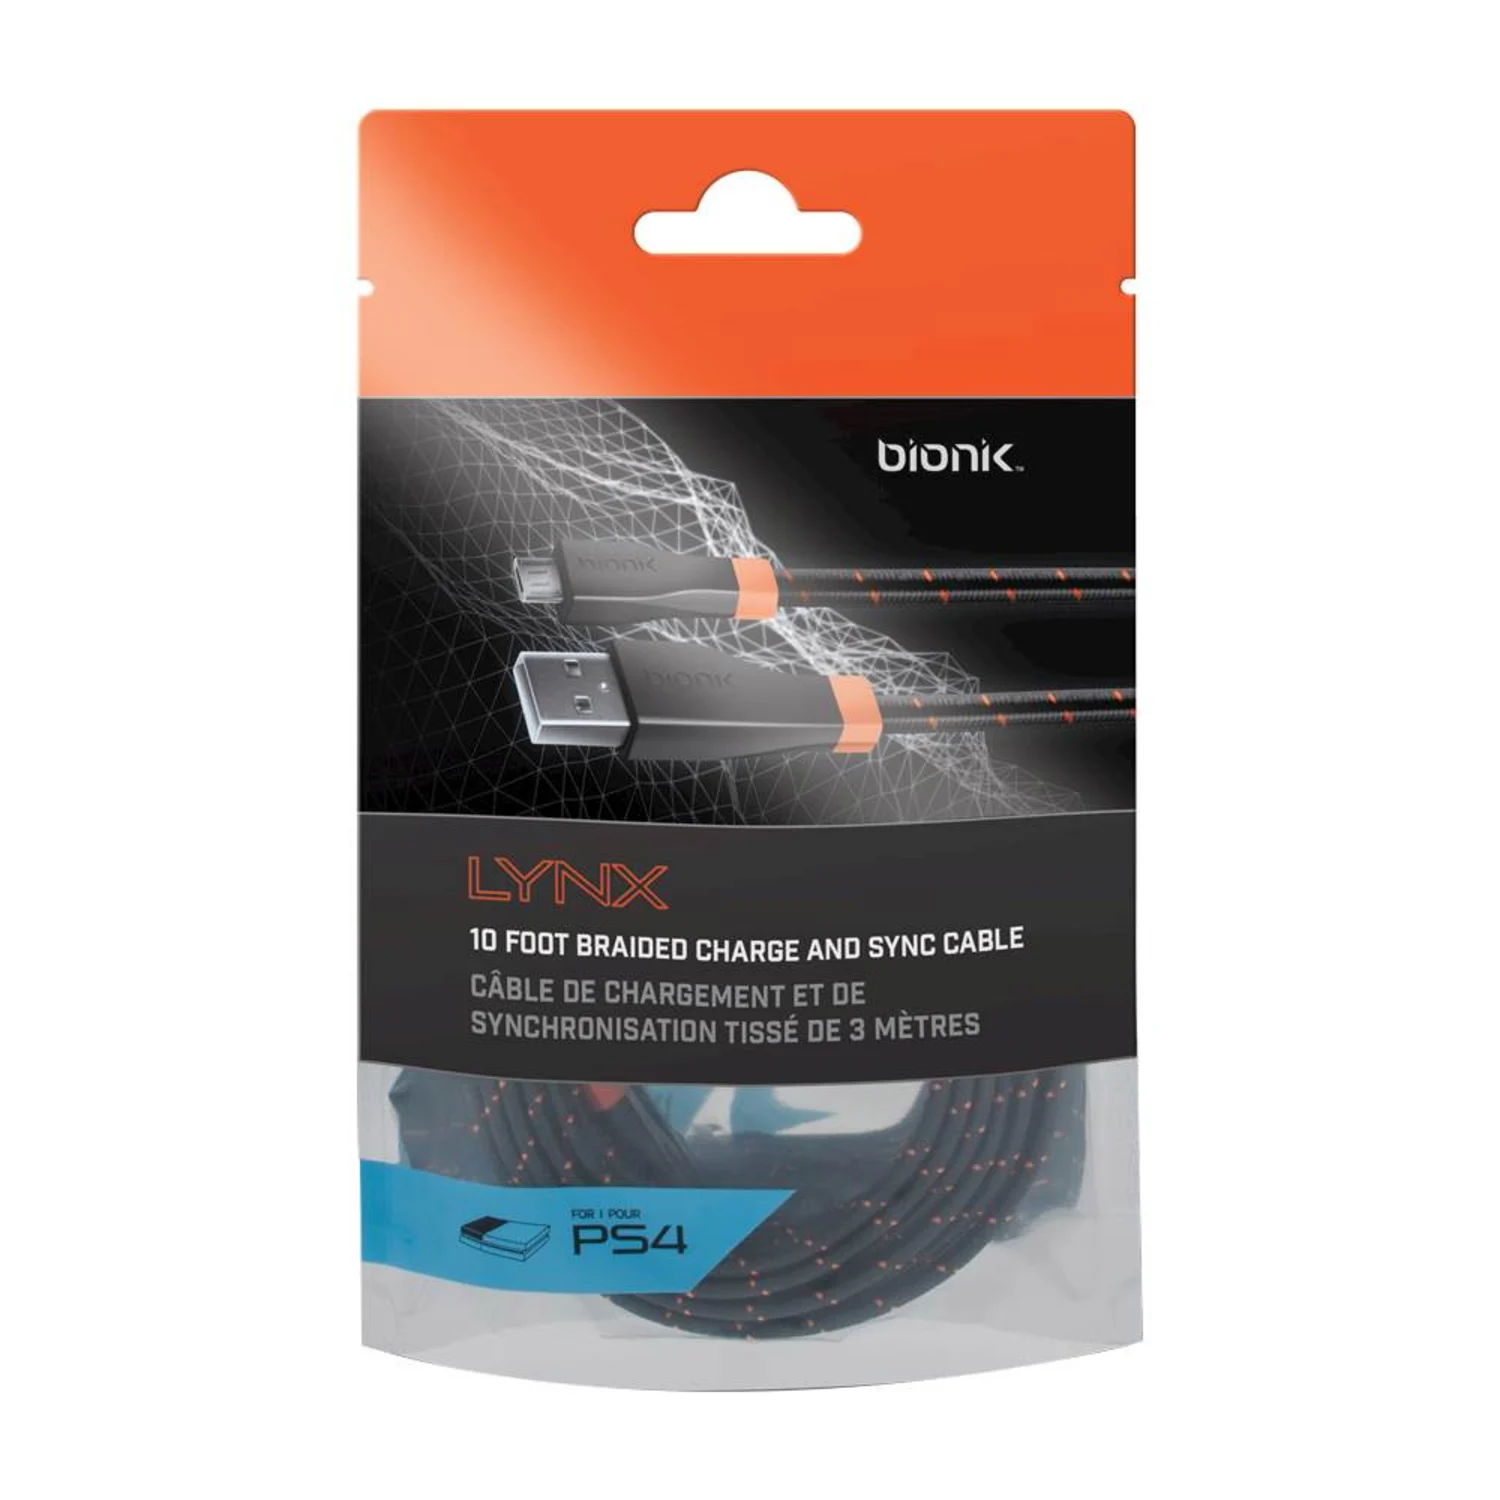 Cabo USB Bionik LYNX para PS4 - Preto e Laranja (BNK-9001)